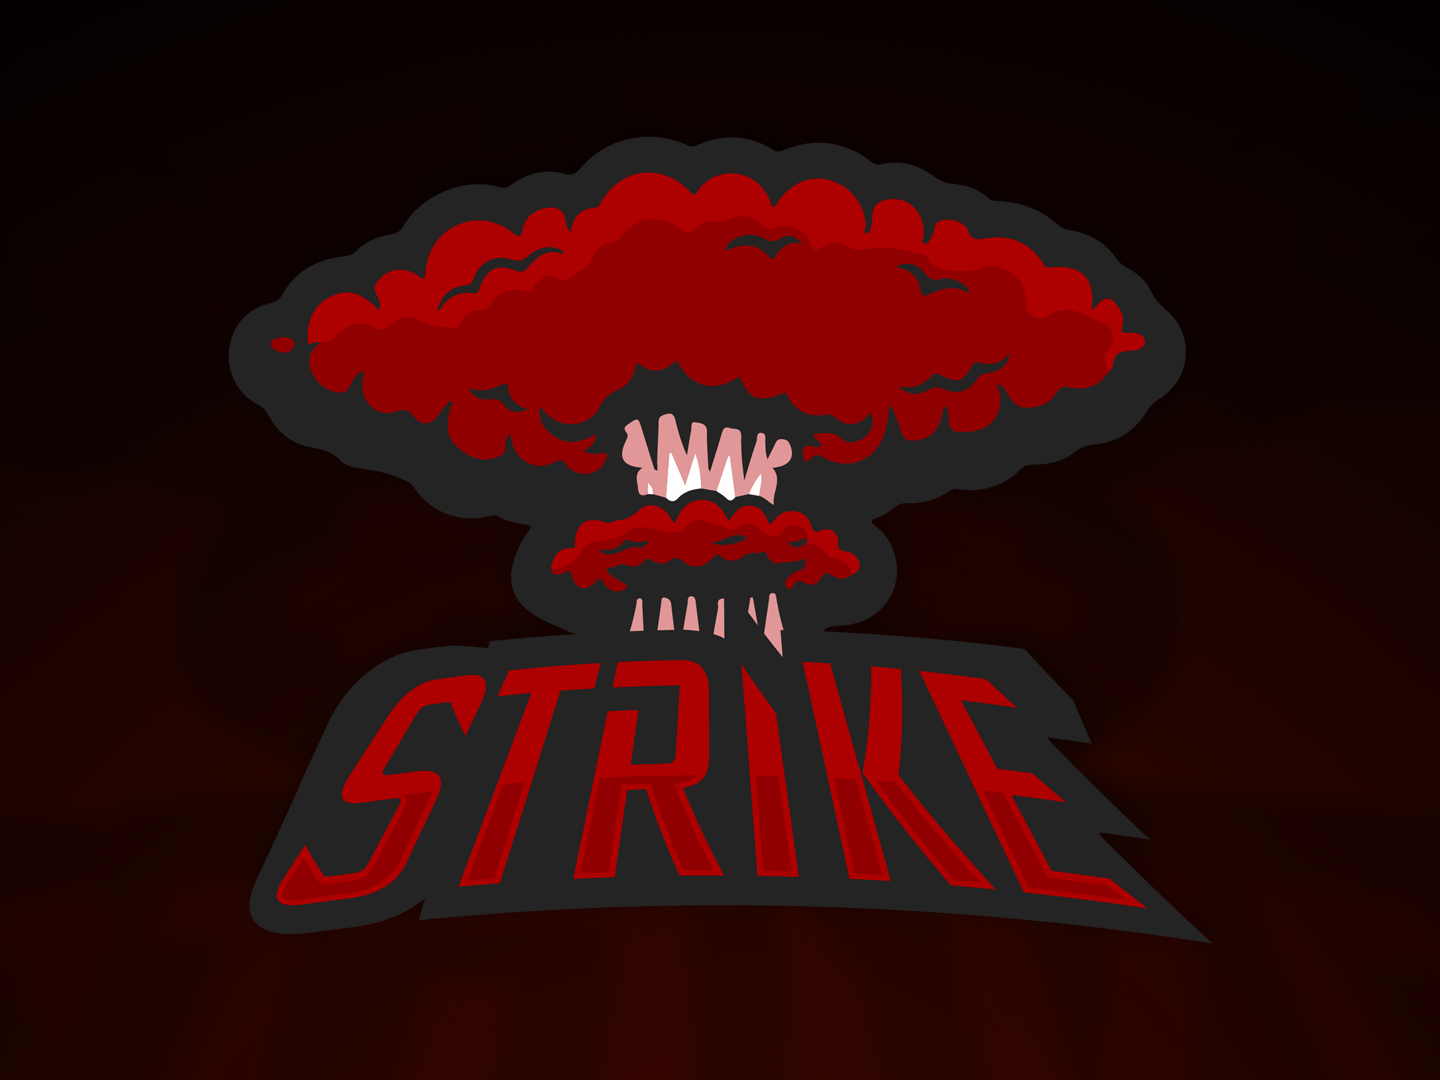 Strike Logo - Esports logo by Maxim Reulliaux on Dribbble